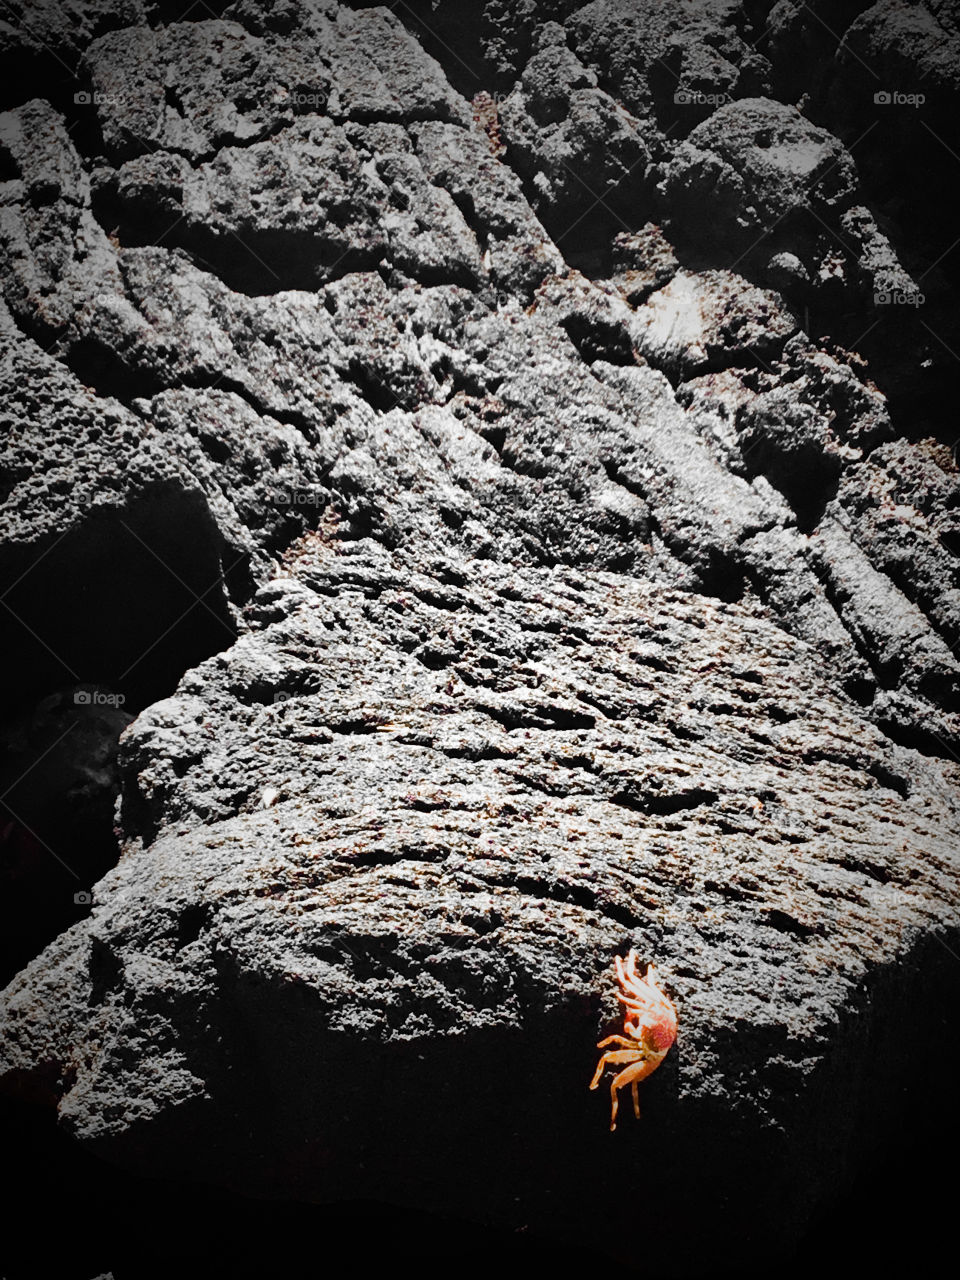 Sea creature on the lava